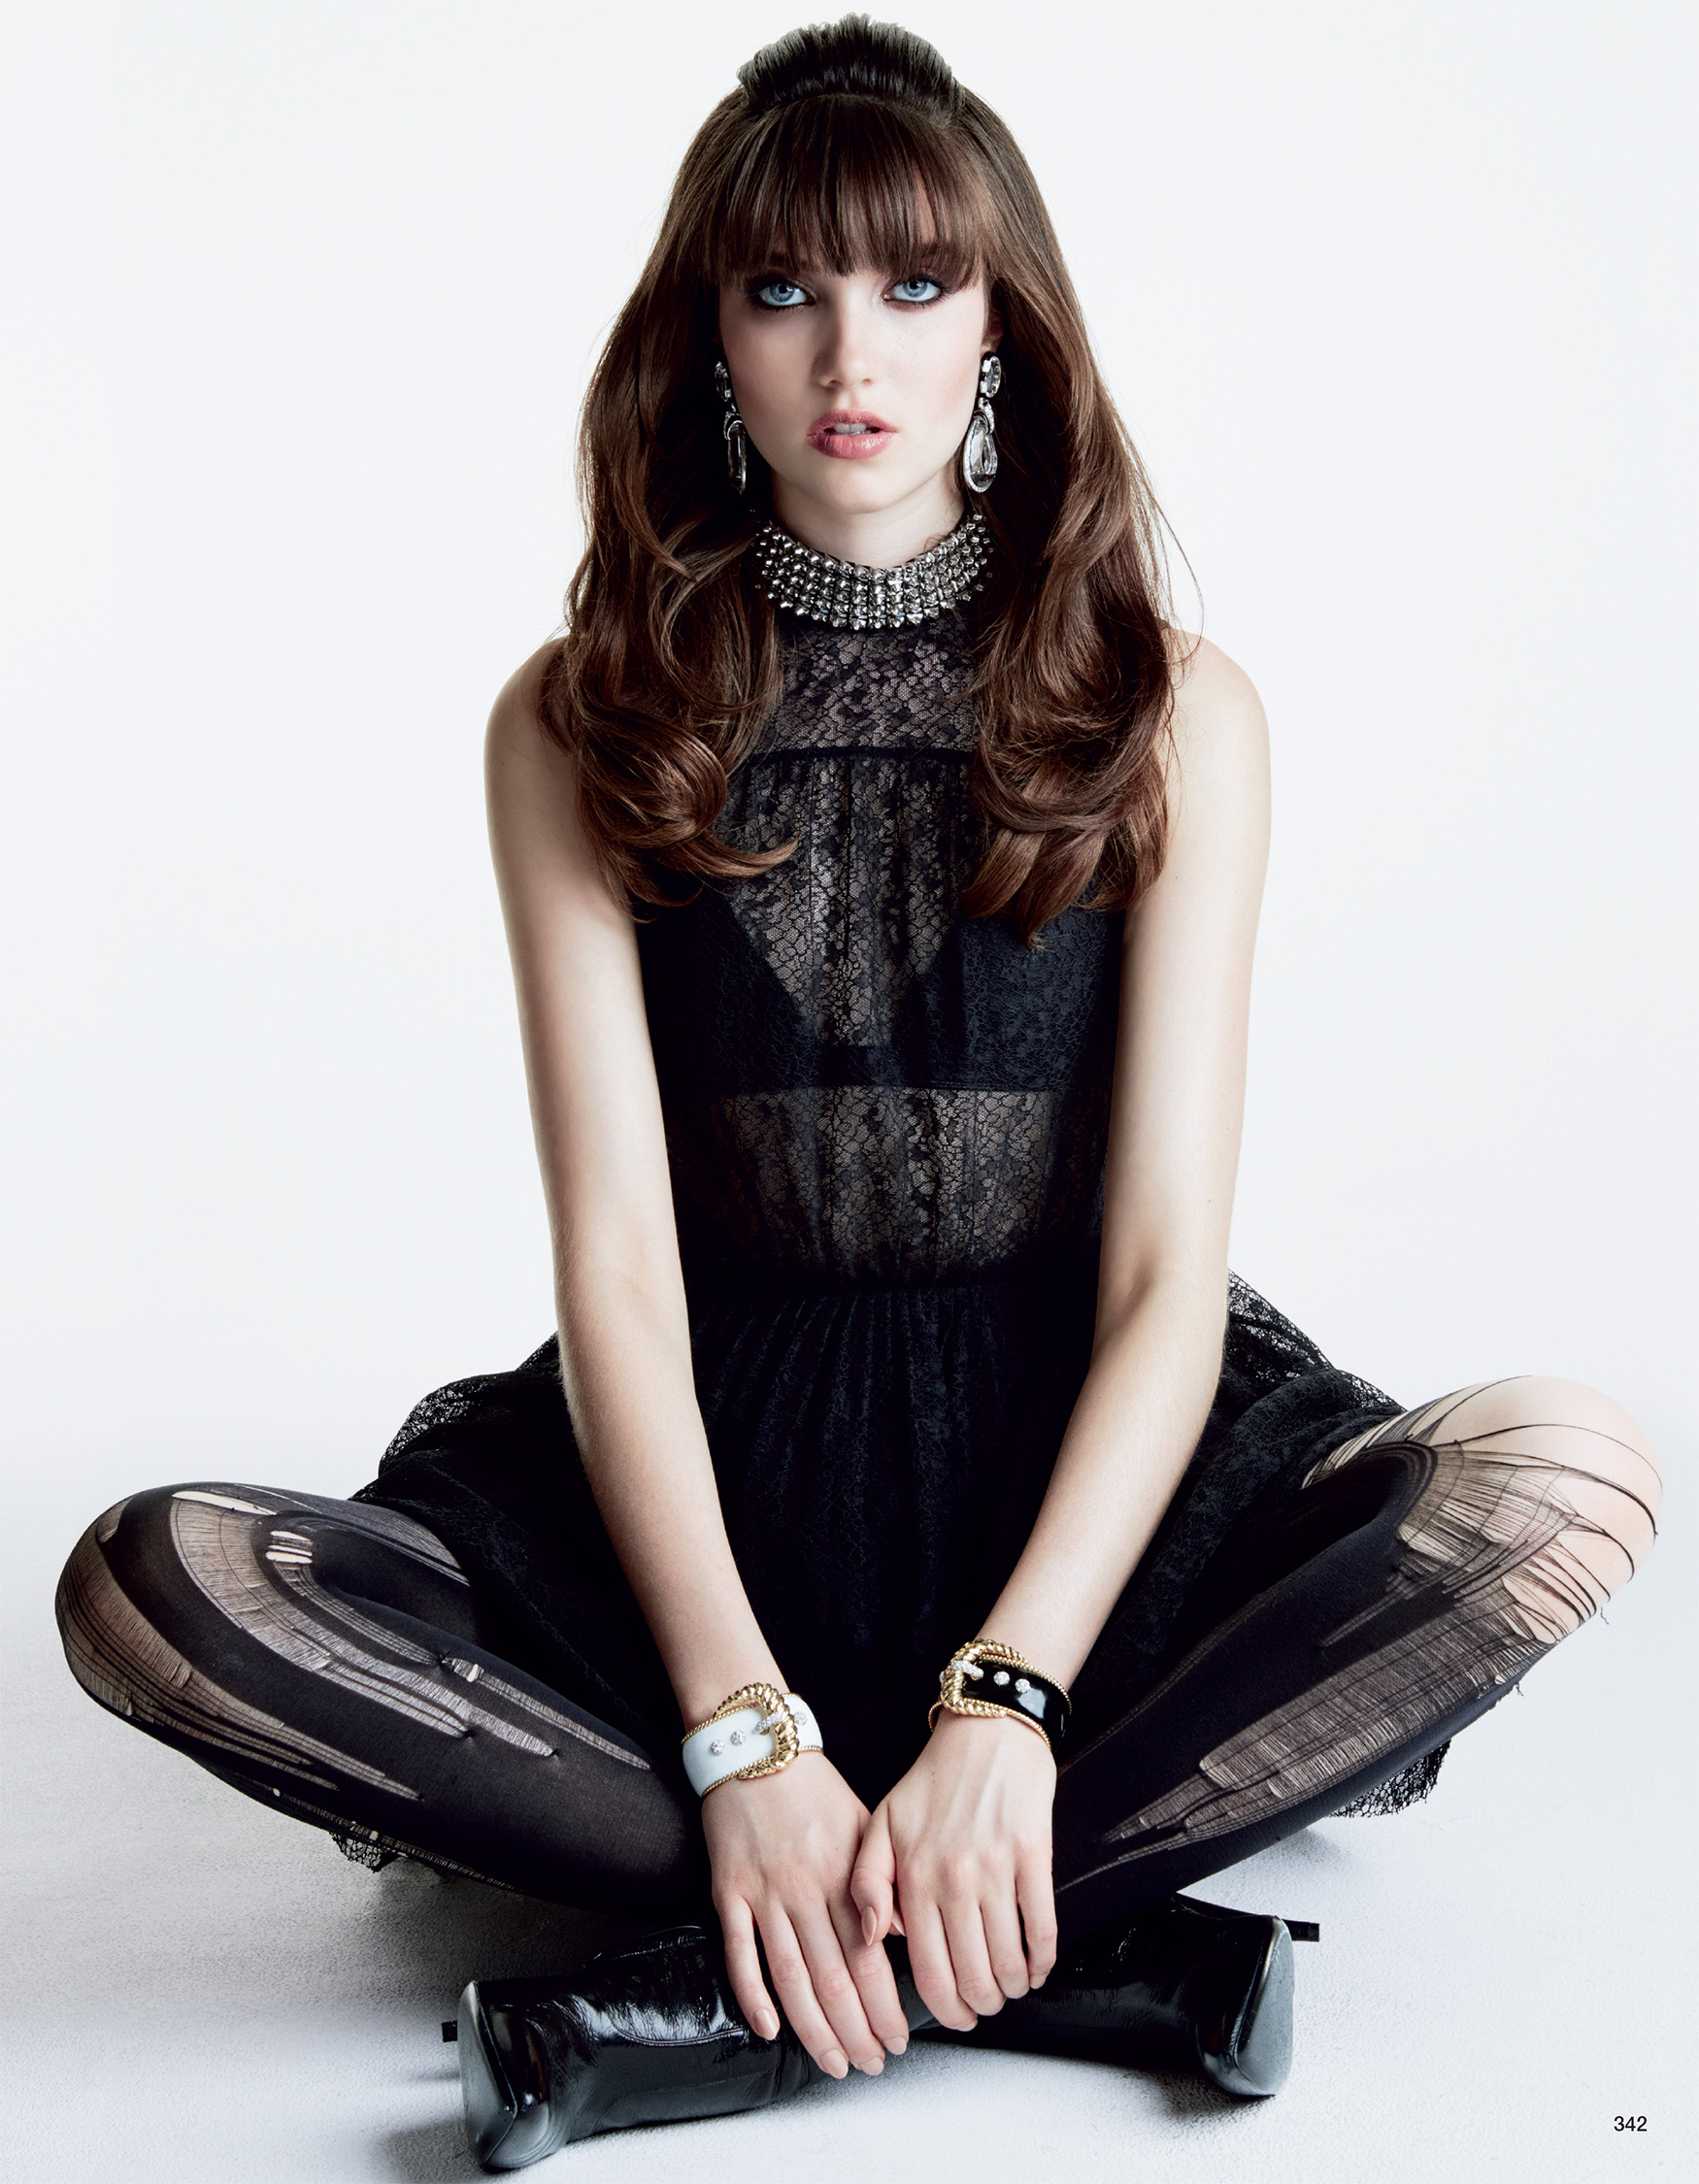 Giovanna-Battaglia-Vogue-Japan-October-2015-Patrick-Demarchelier-5.jpg